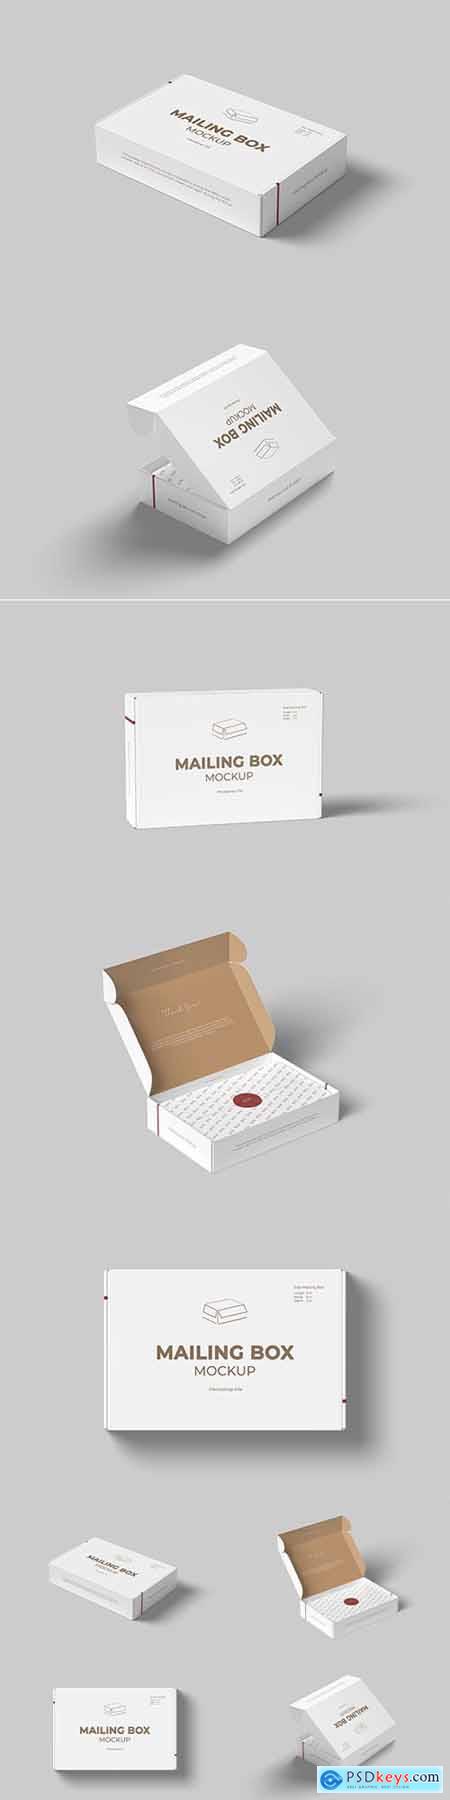 Mailing box mockup